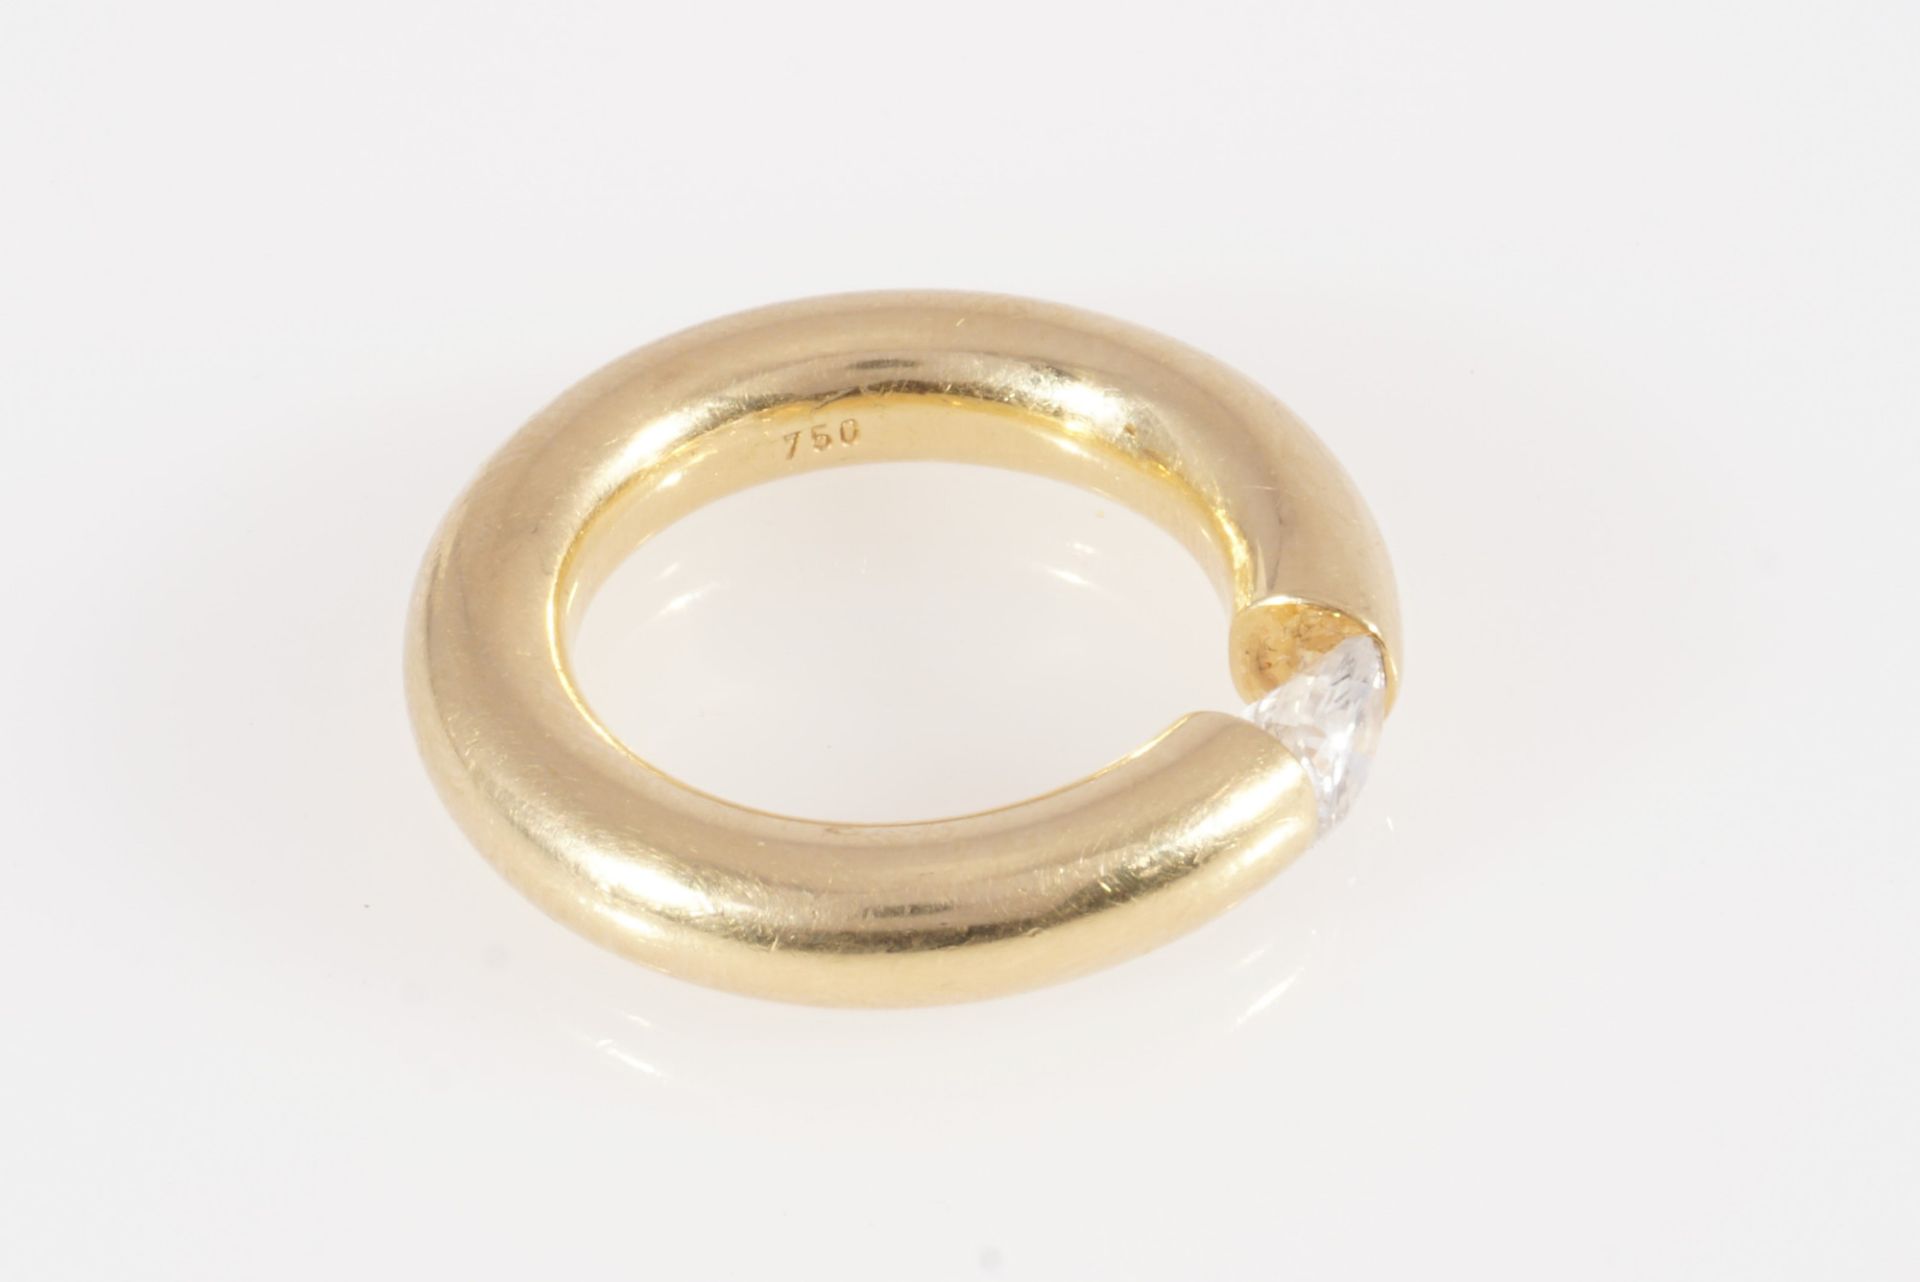 750 gold clamping ring with diamond 0,75 carat, 18K Gold Spannring mit Brillant, Niessing art, - Image 4 of 4